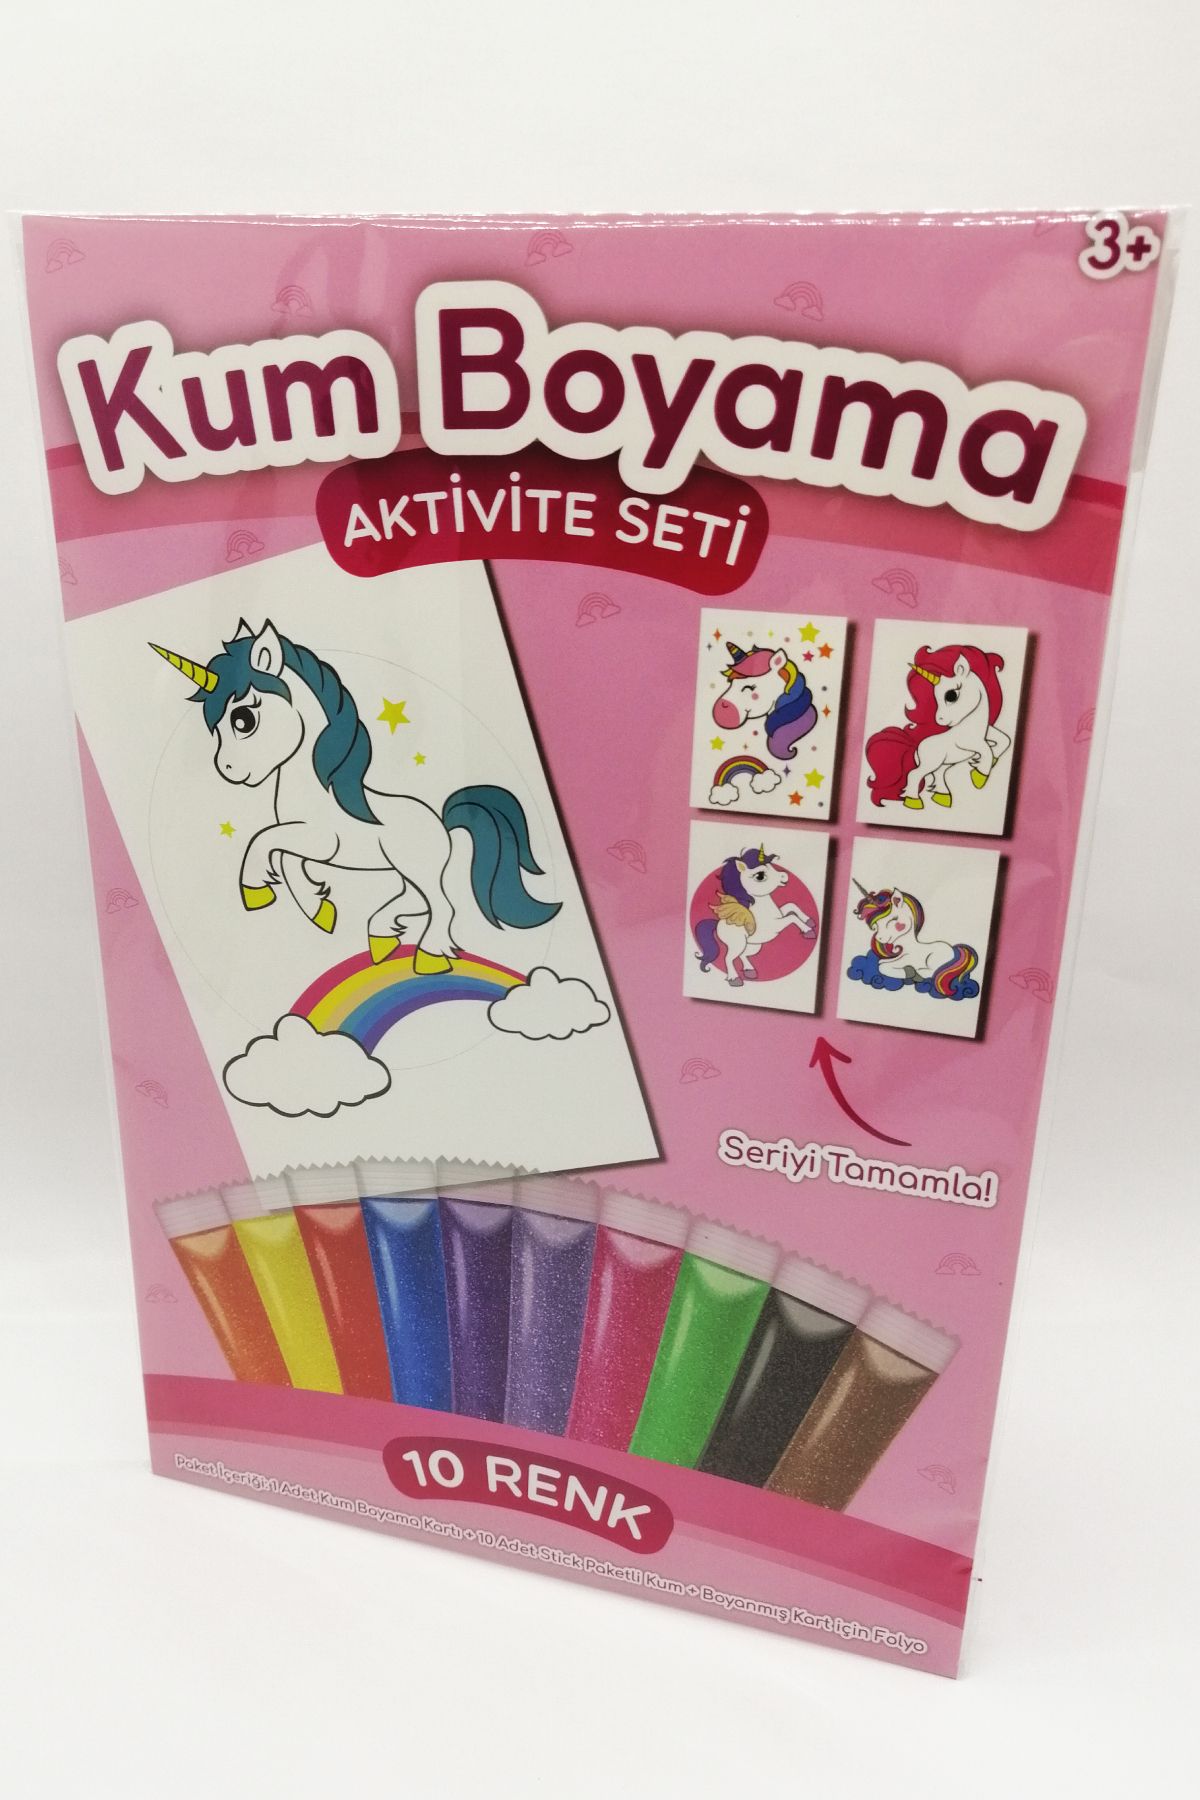 Kumbo Kum Boyama Neşeli Unicorn | Unicorn Kum Boyama Aktivite Seti